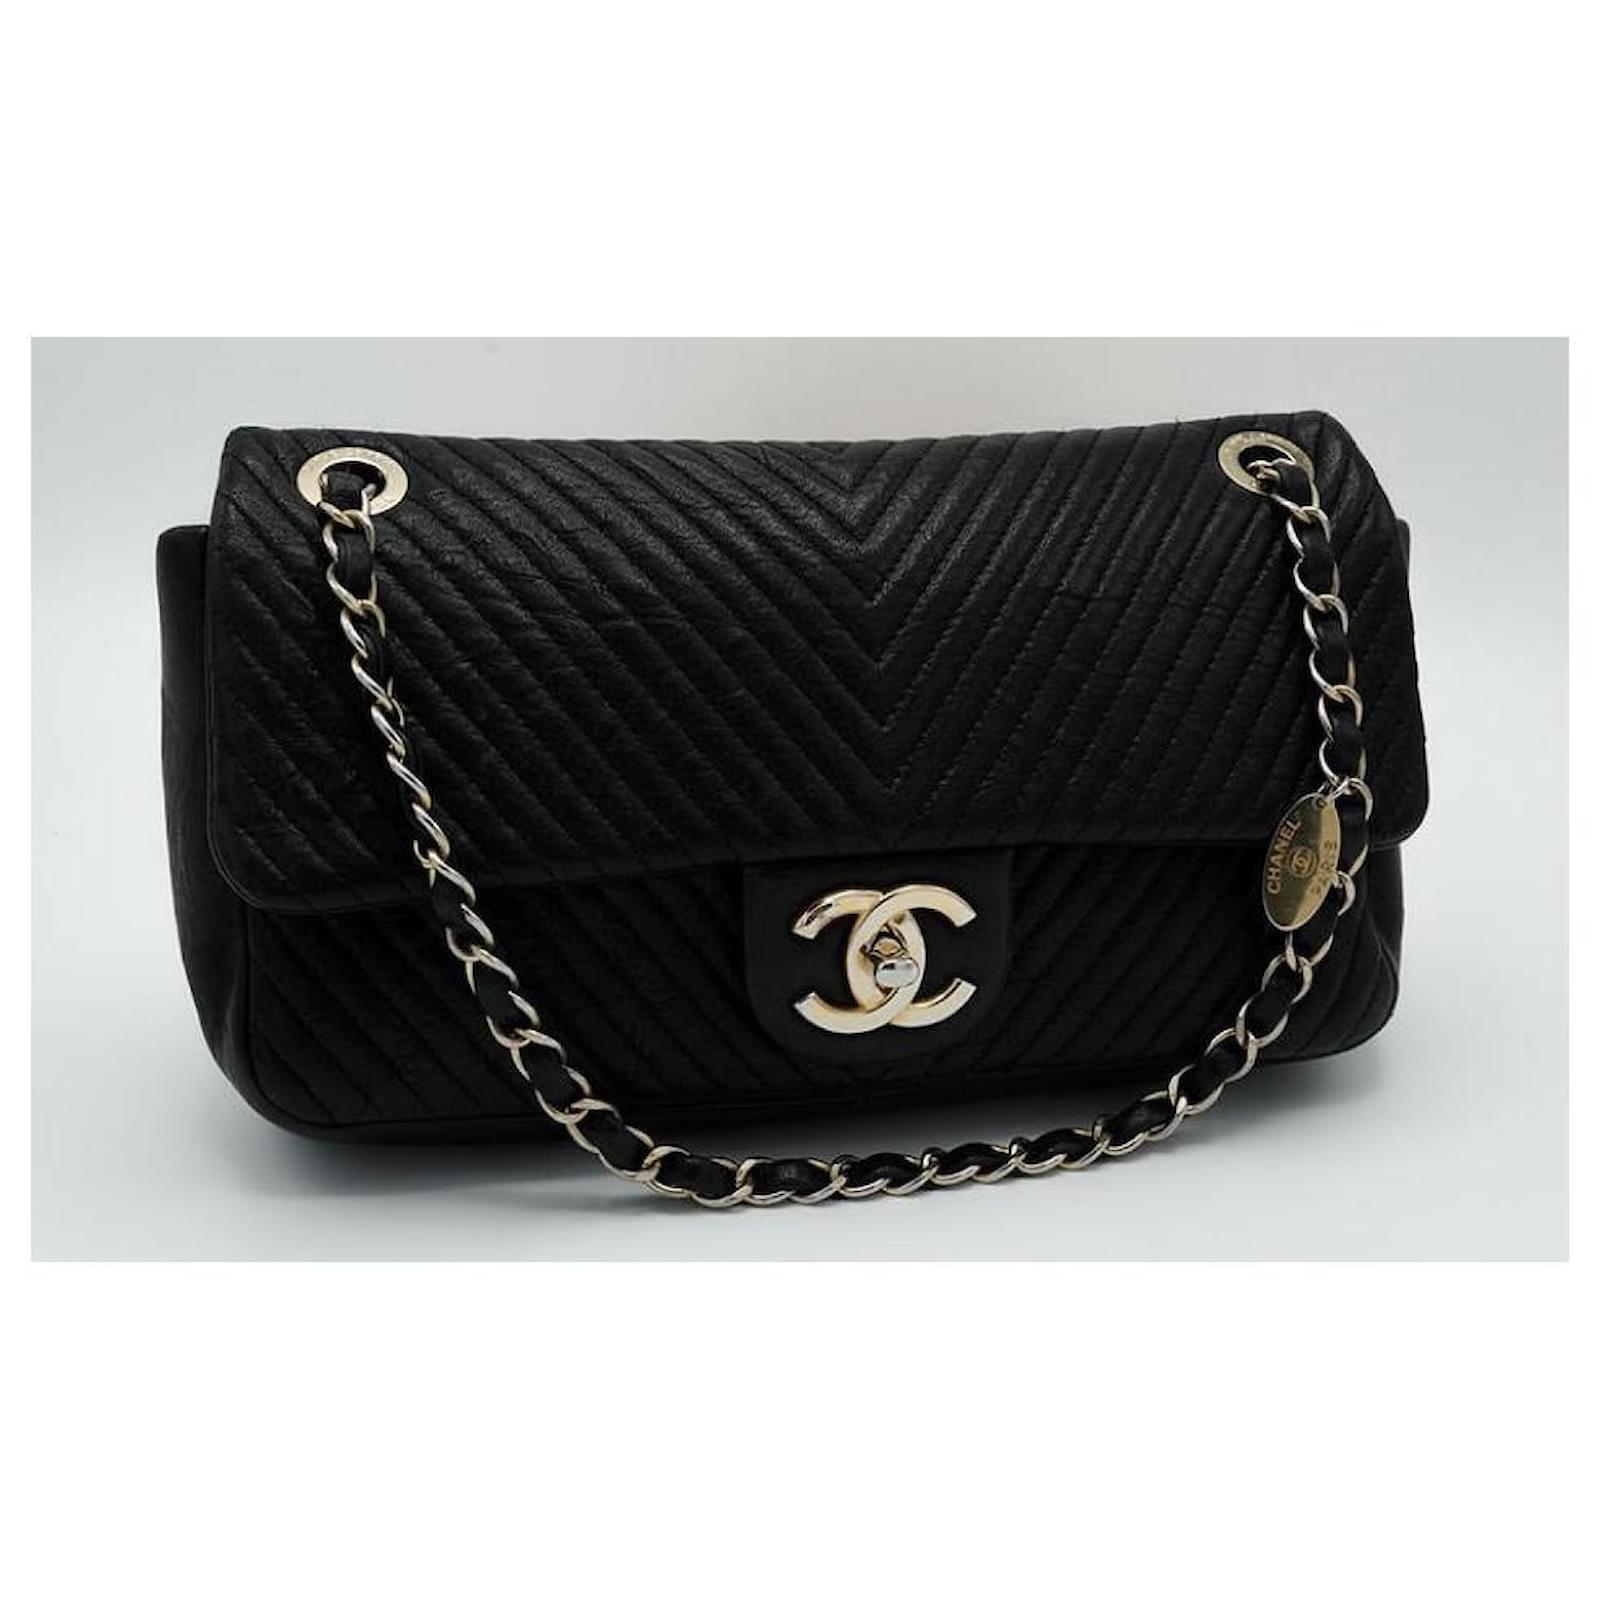 Handbags Chanel Chanel Medium Black Leather Medallion Charm Surpique Wrinkled Lambskin Chevron V Stitch Classic Flap Bag with Light Gold Tone Hardware